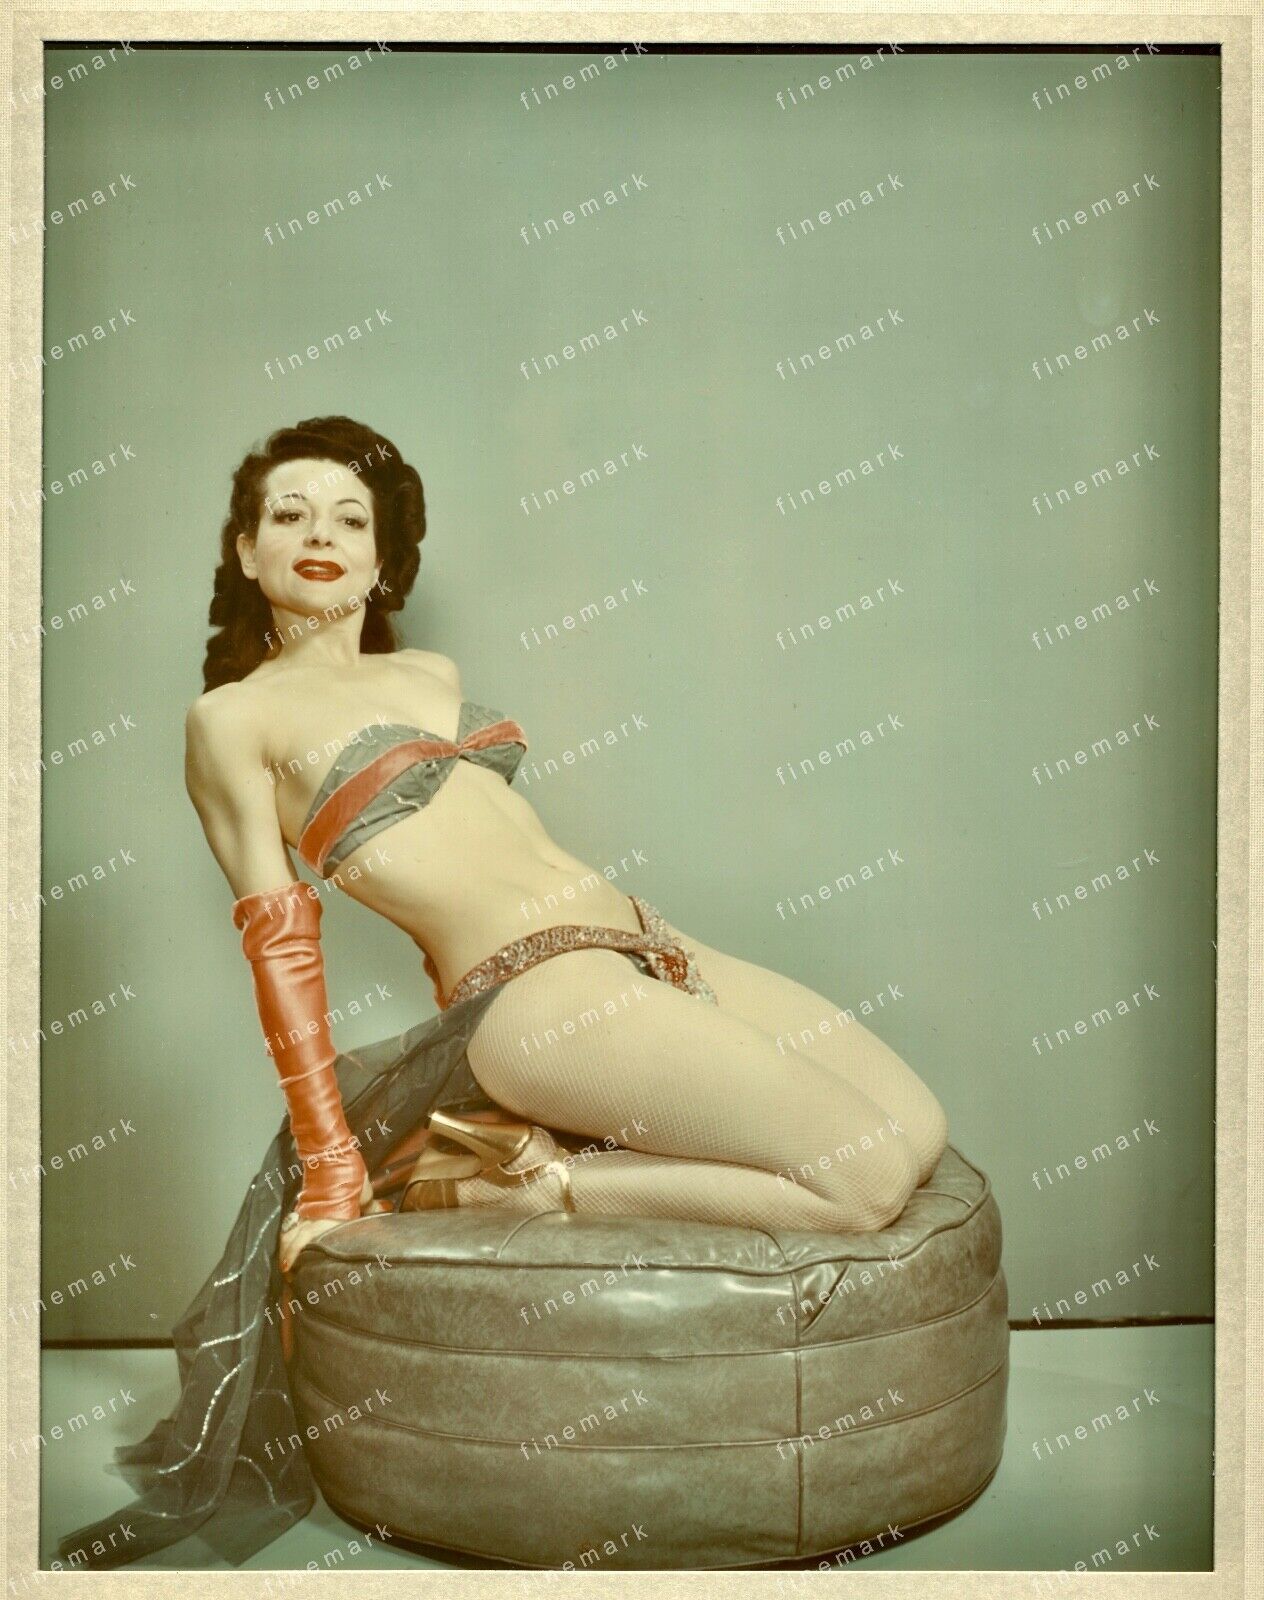 1950 PHOTOGRAPH VINTAGE ORIGINAL ROSE LA ROSE BURLESQUE ANSCO HIGH GLOSS COLOR 2